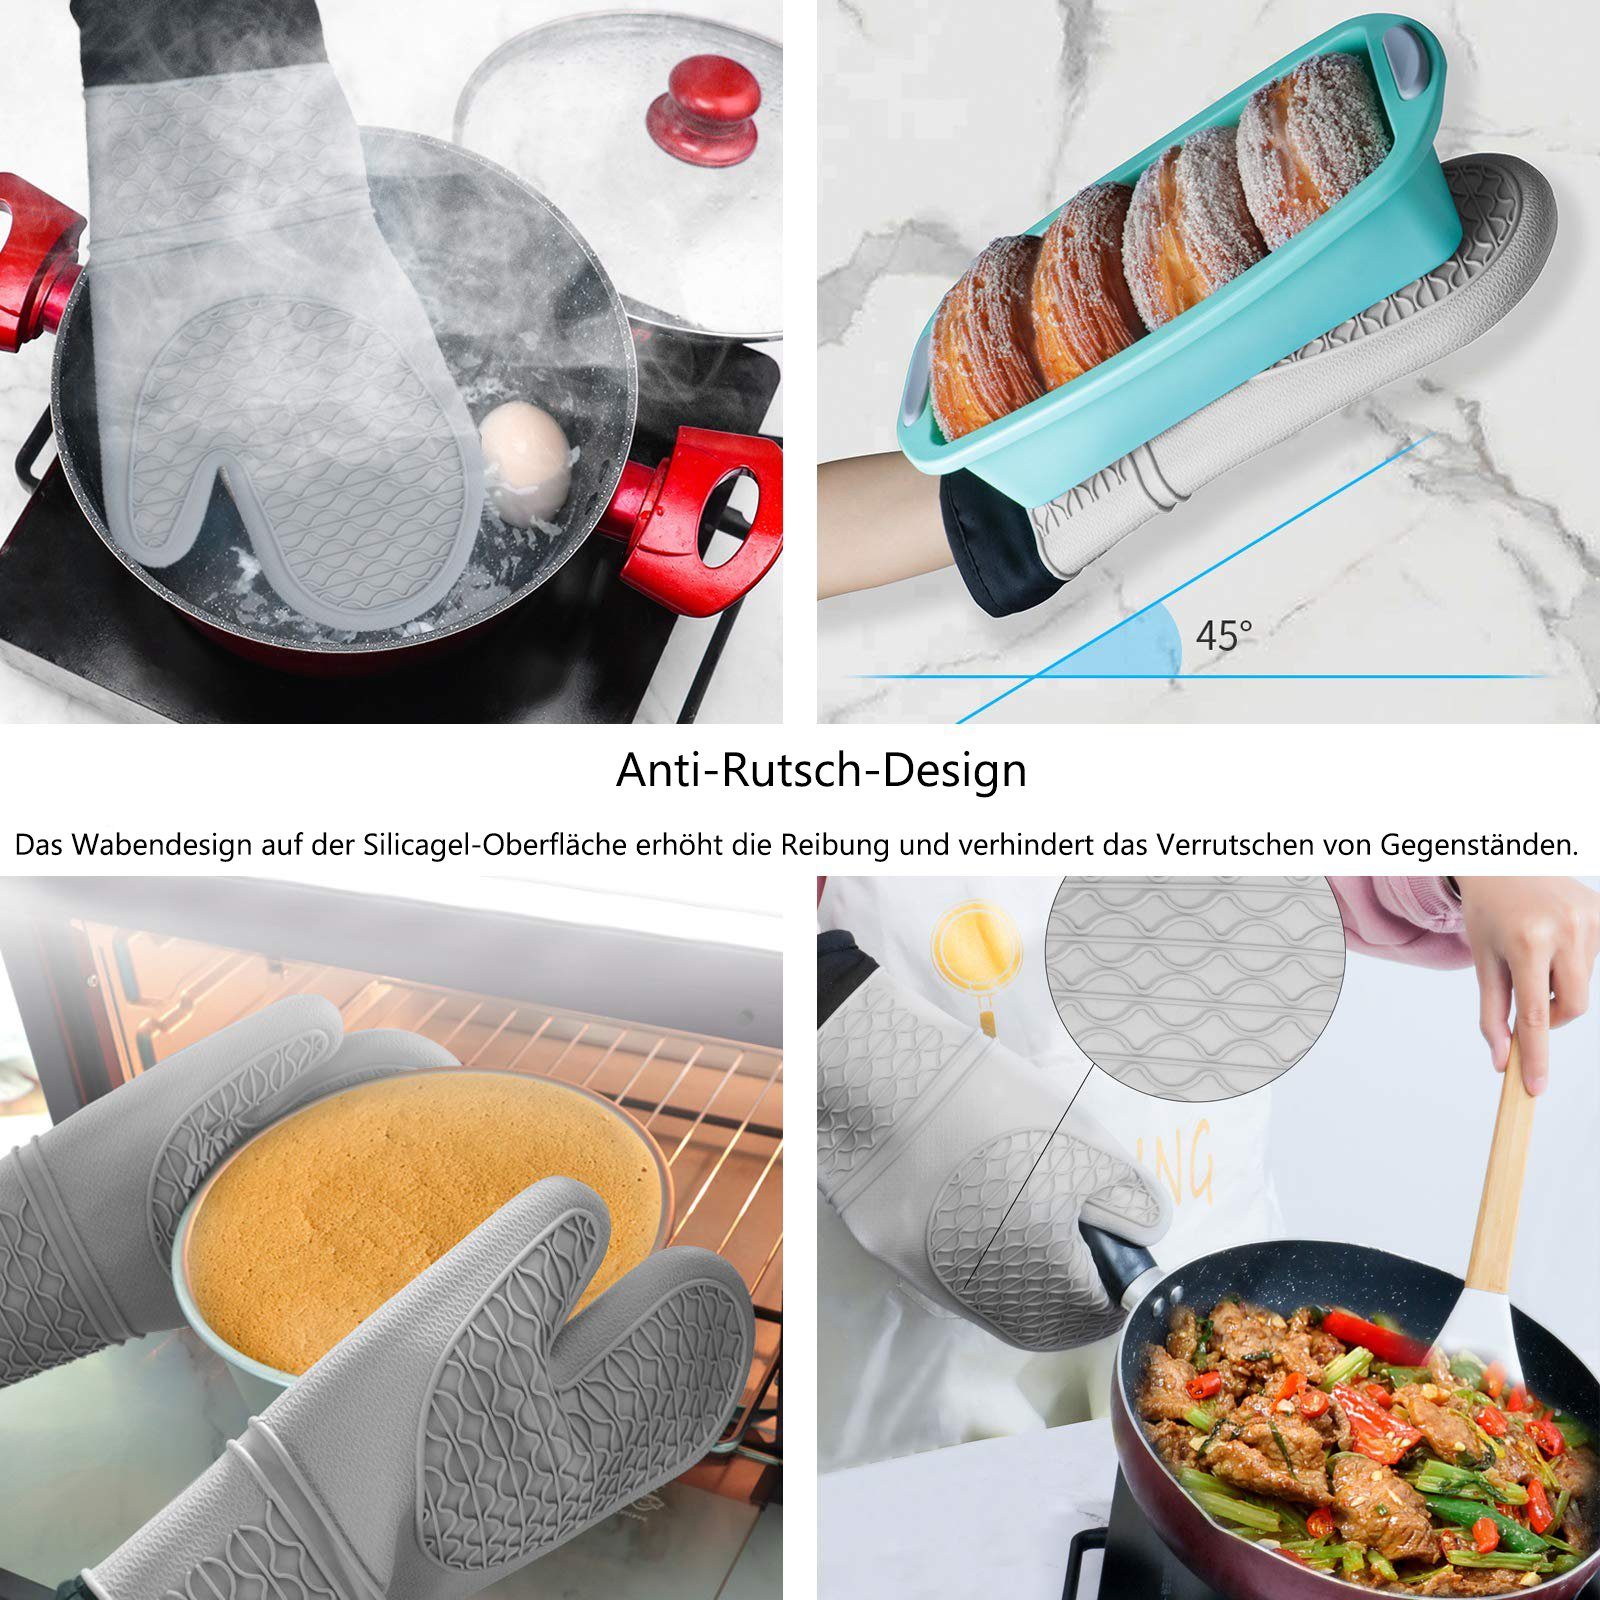 Baumarkt Grills Housruse Grillhandschuhe Oven Mitts Heat Resistant 573.15K, Premium Silicone Slip Pot Holders, Oven Gloves with 